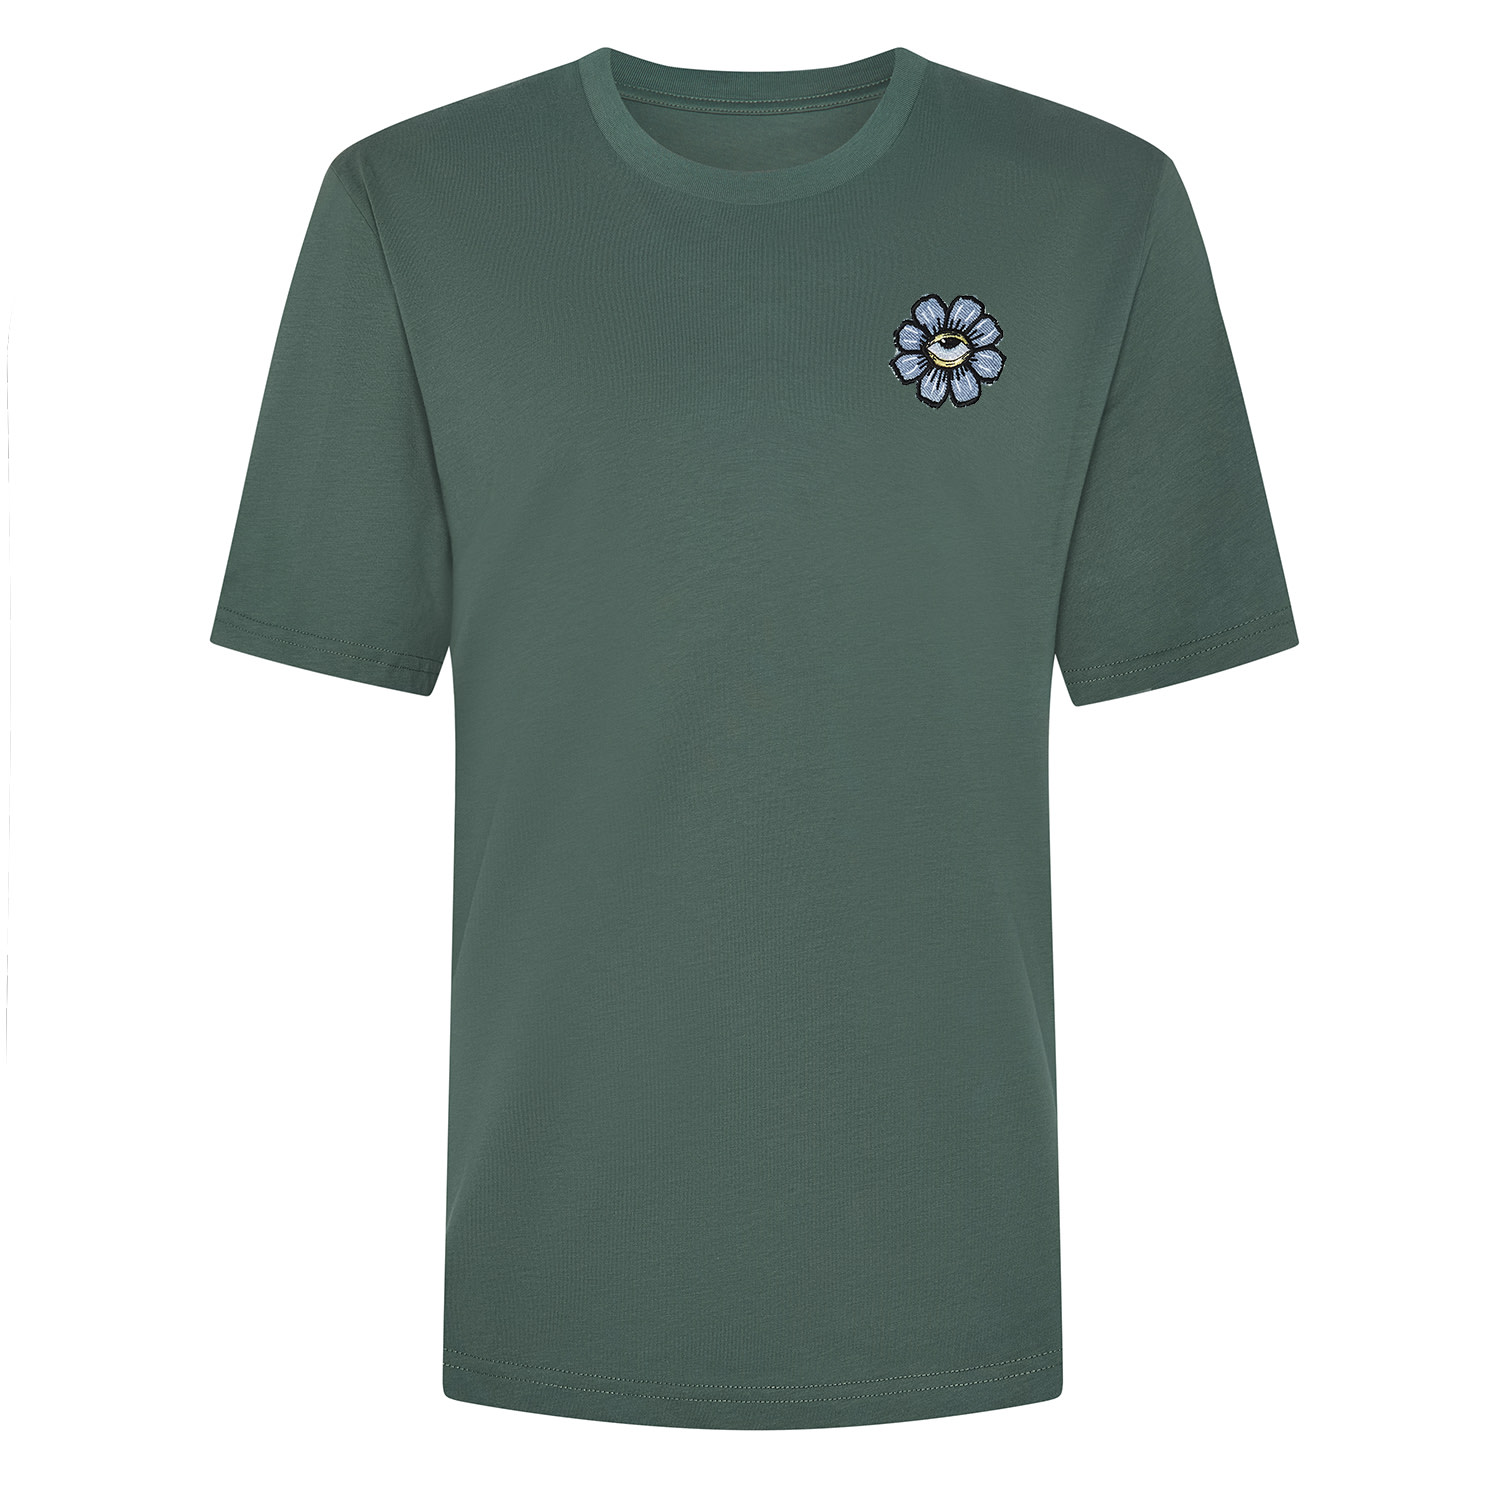 Ingmarson Blue Eyed Flower Upcycled Appliqué T-shirt Green Men